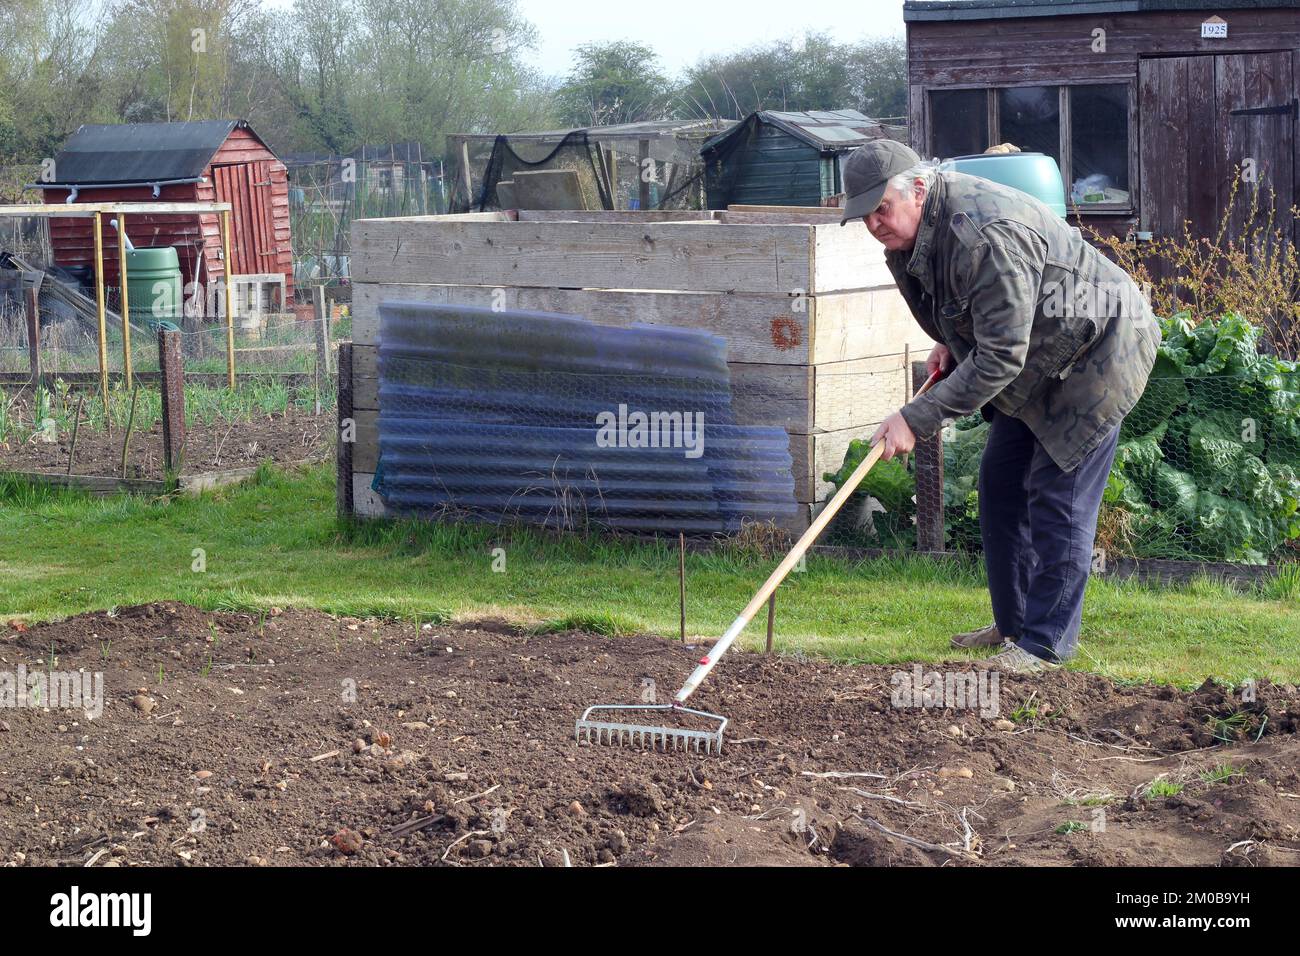 Senior or old man raking his garden or allotment. Gardener preparing ground to plant or sow seeds. Stock Photo